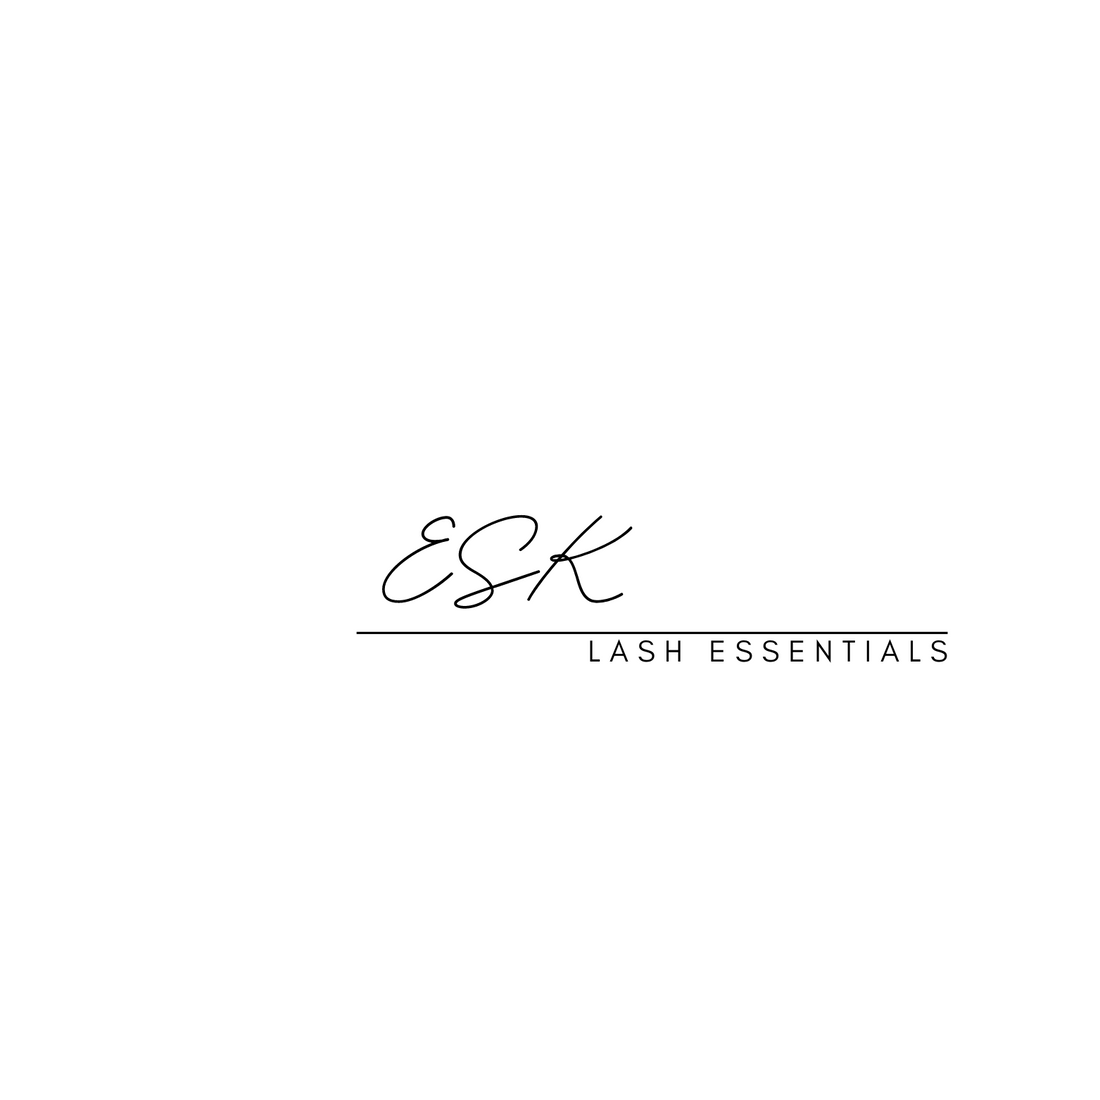 ESK Lash Magic Essentials ESK eyelash extension products and supplies 8/11/23 3:32pm